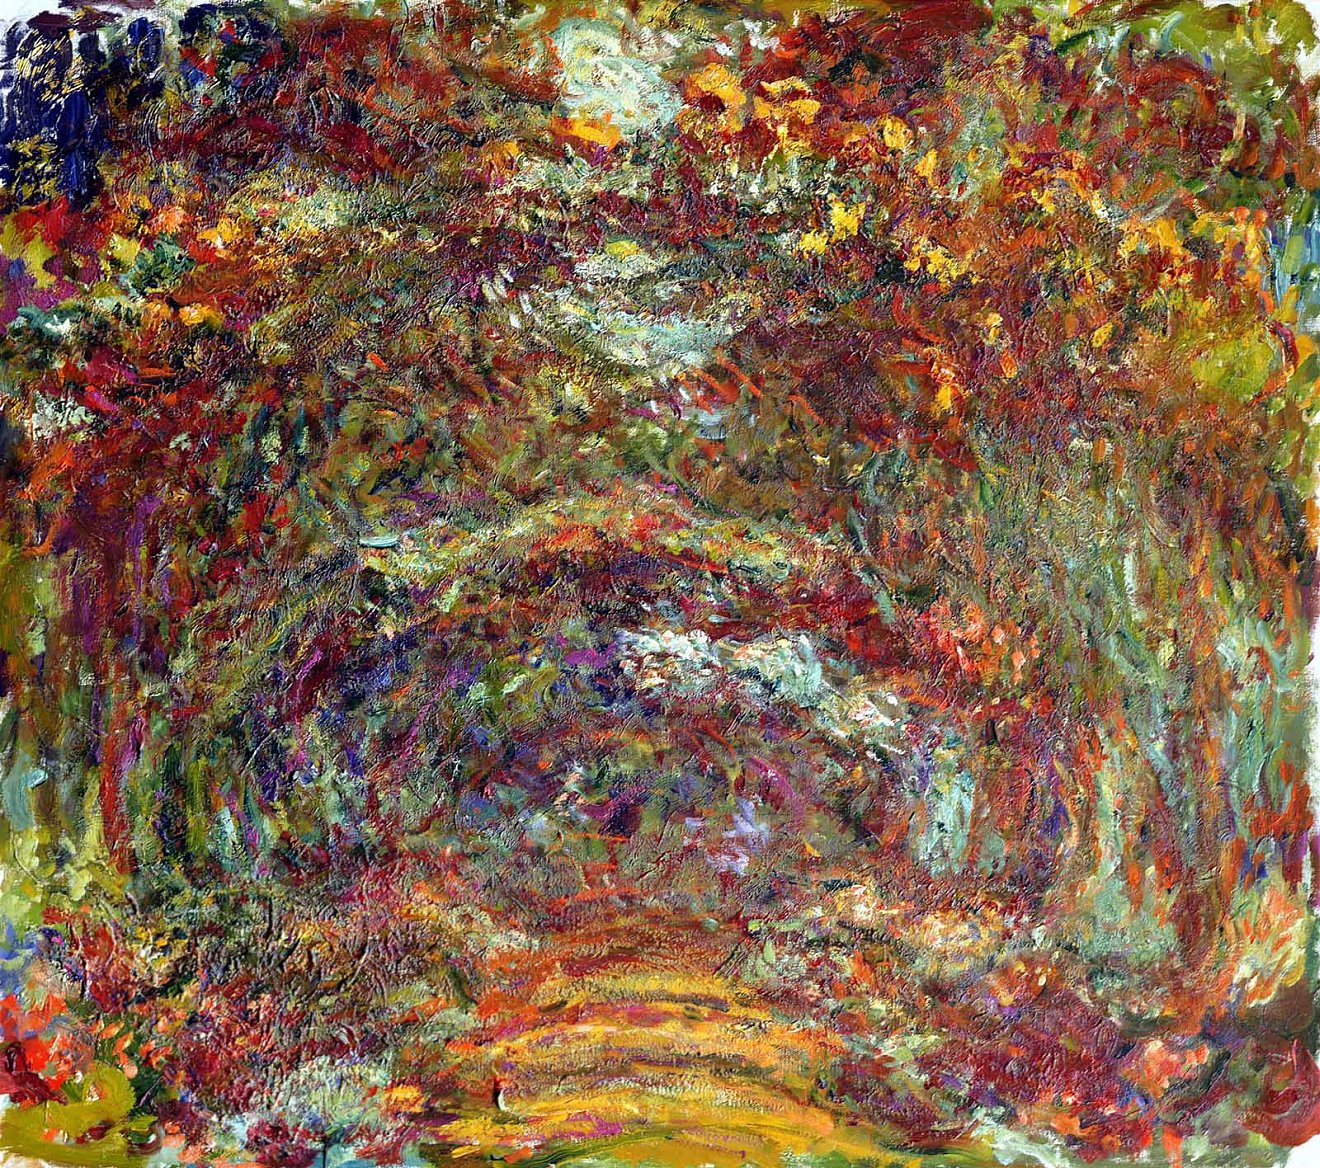 Claude+Monet-1840-1926 (387).jpg